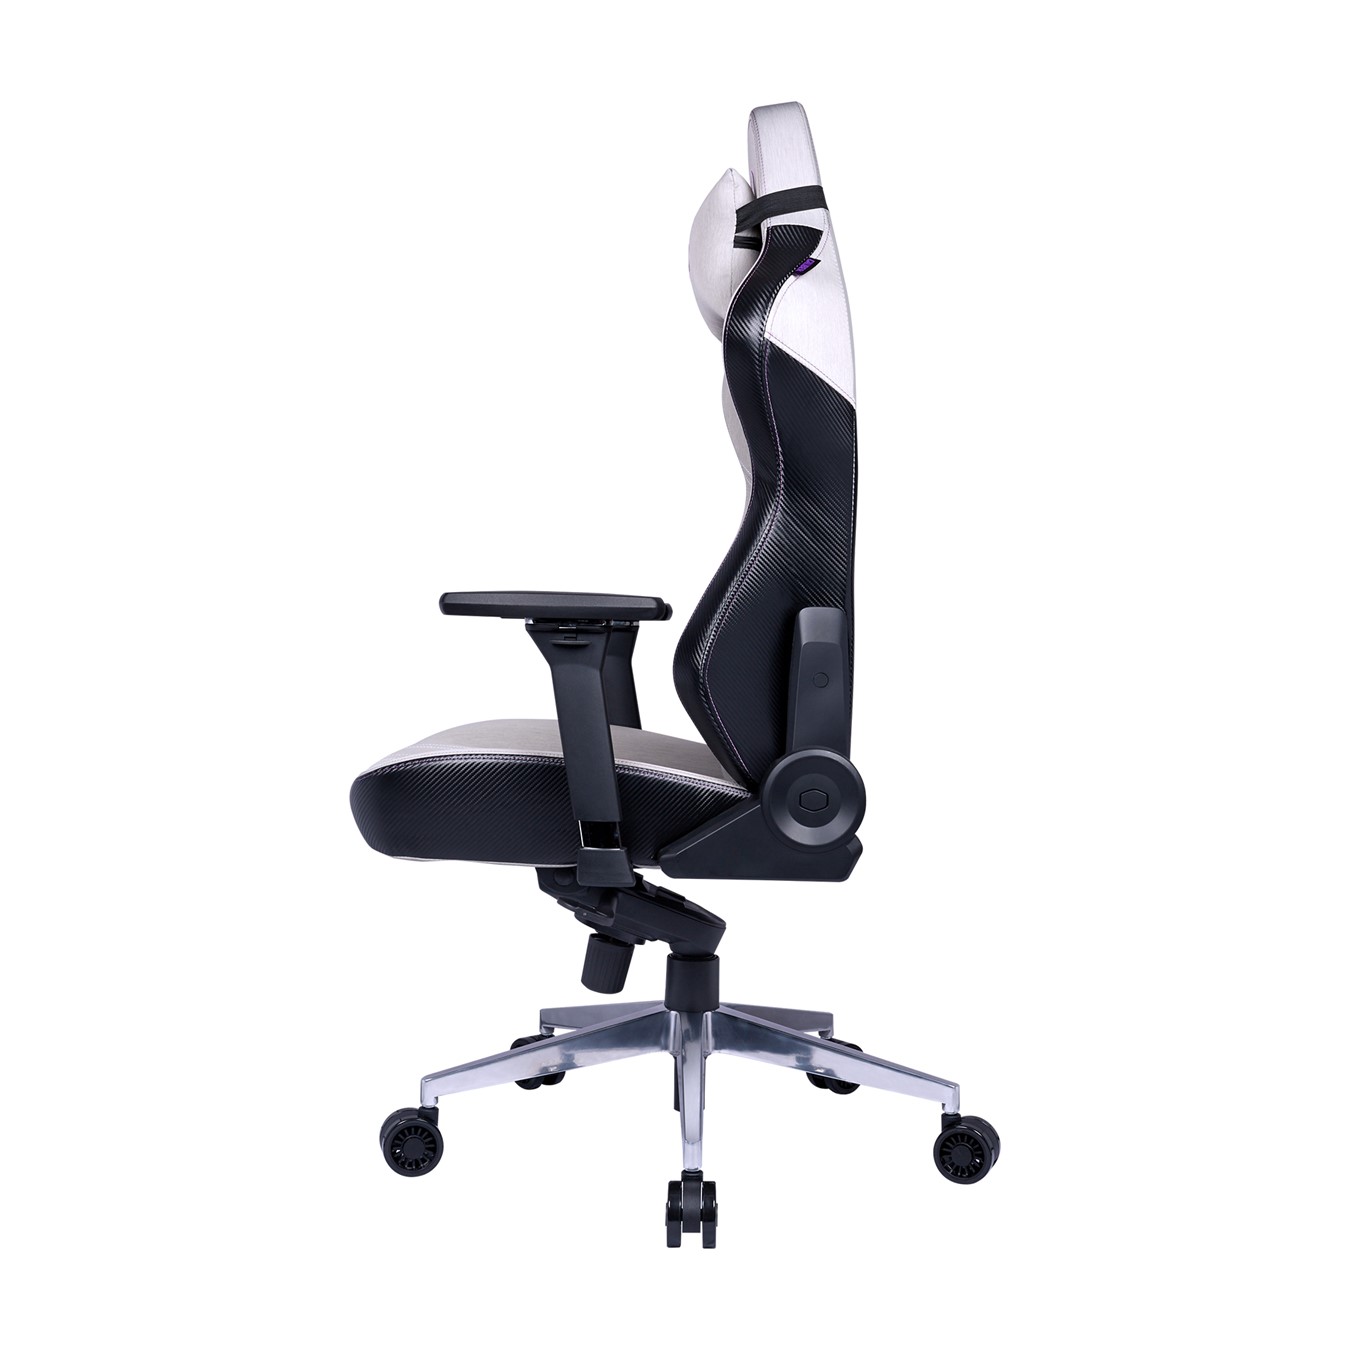 Caliber X1C Gaming Chair - side angle view